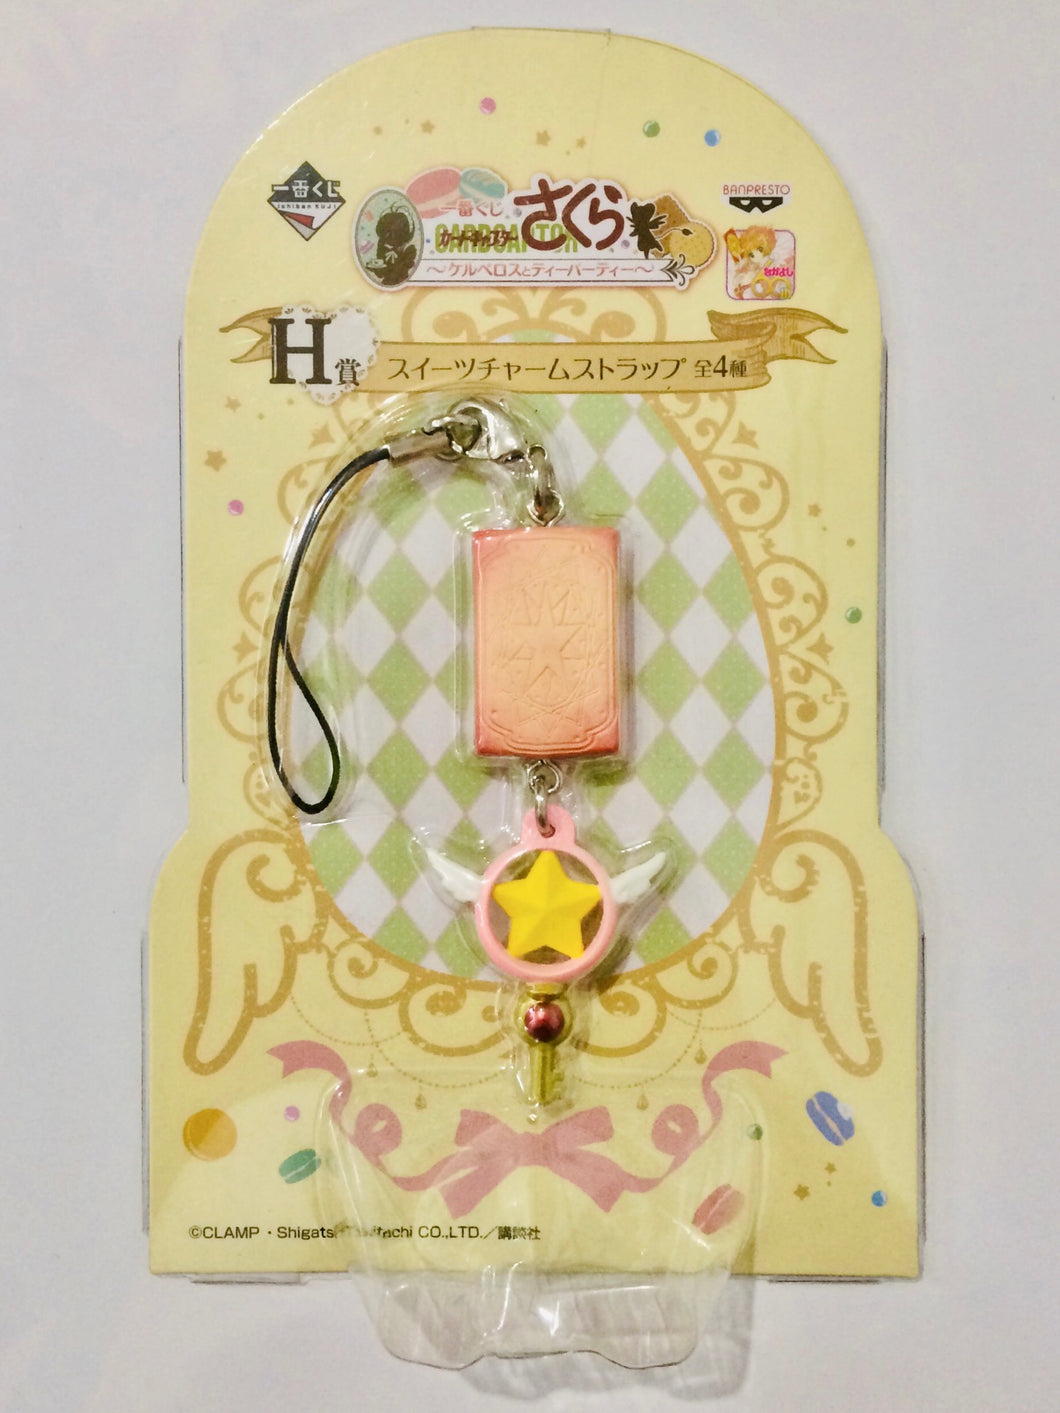 Card Captor Sakura - Charm - Ichiban Kuji - Kerberos to Teaparty - Star Key ver.